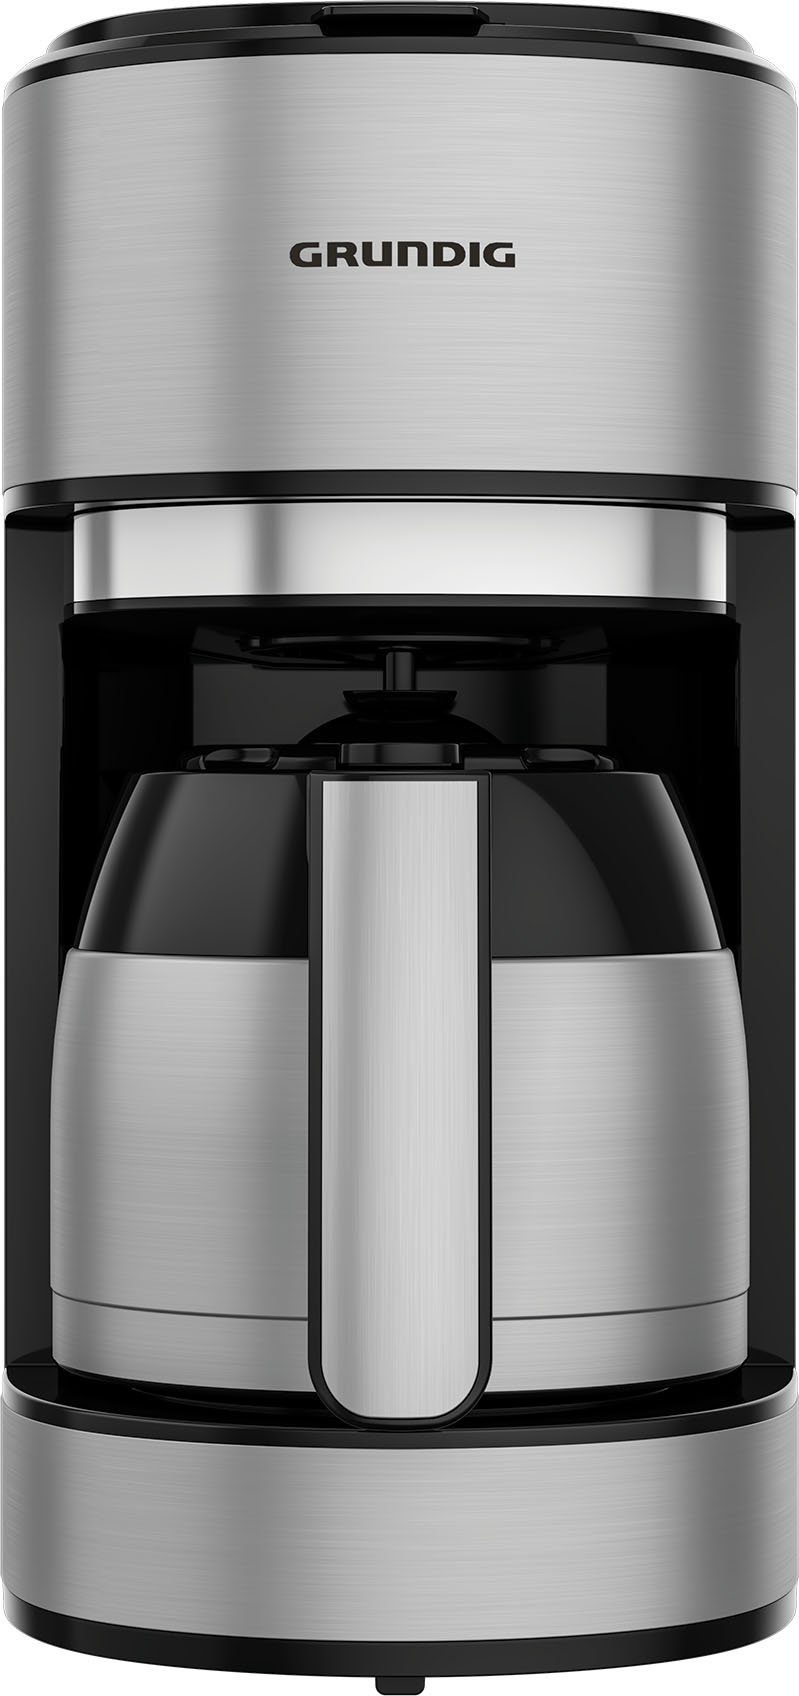 Grundig Filterkaffeemaschine KM 5620 1l T, Kaffeekanne